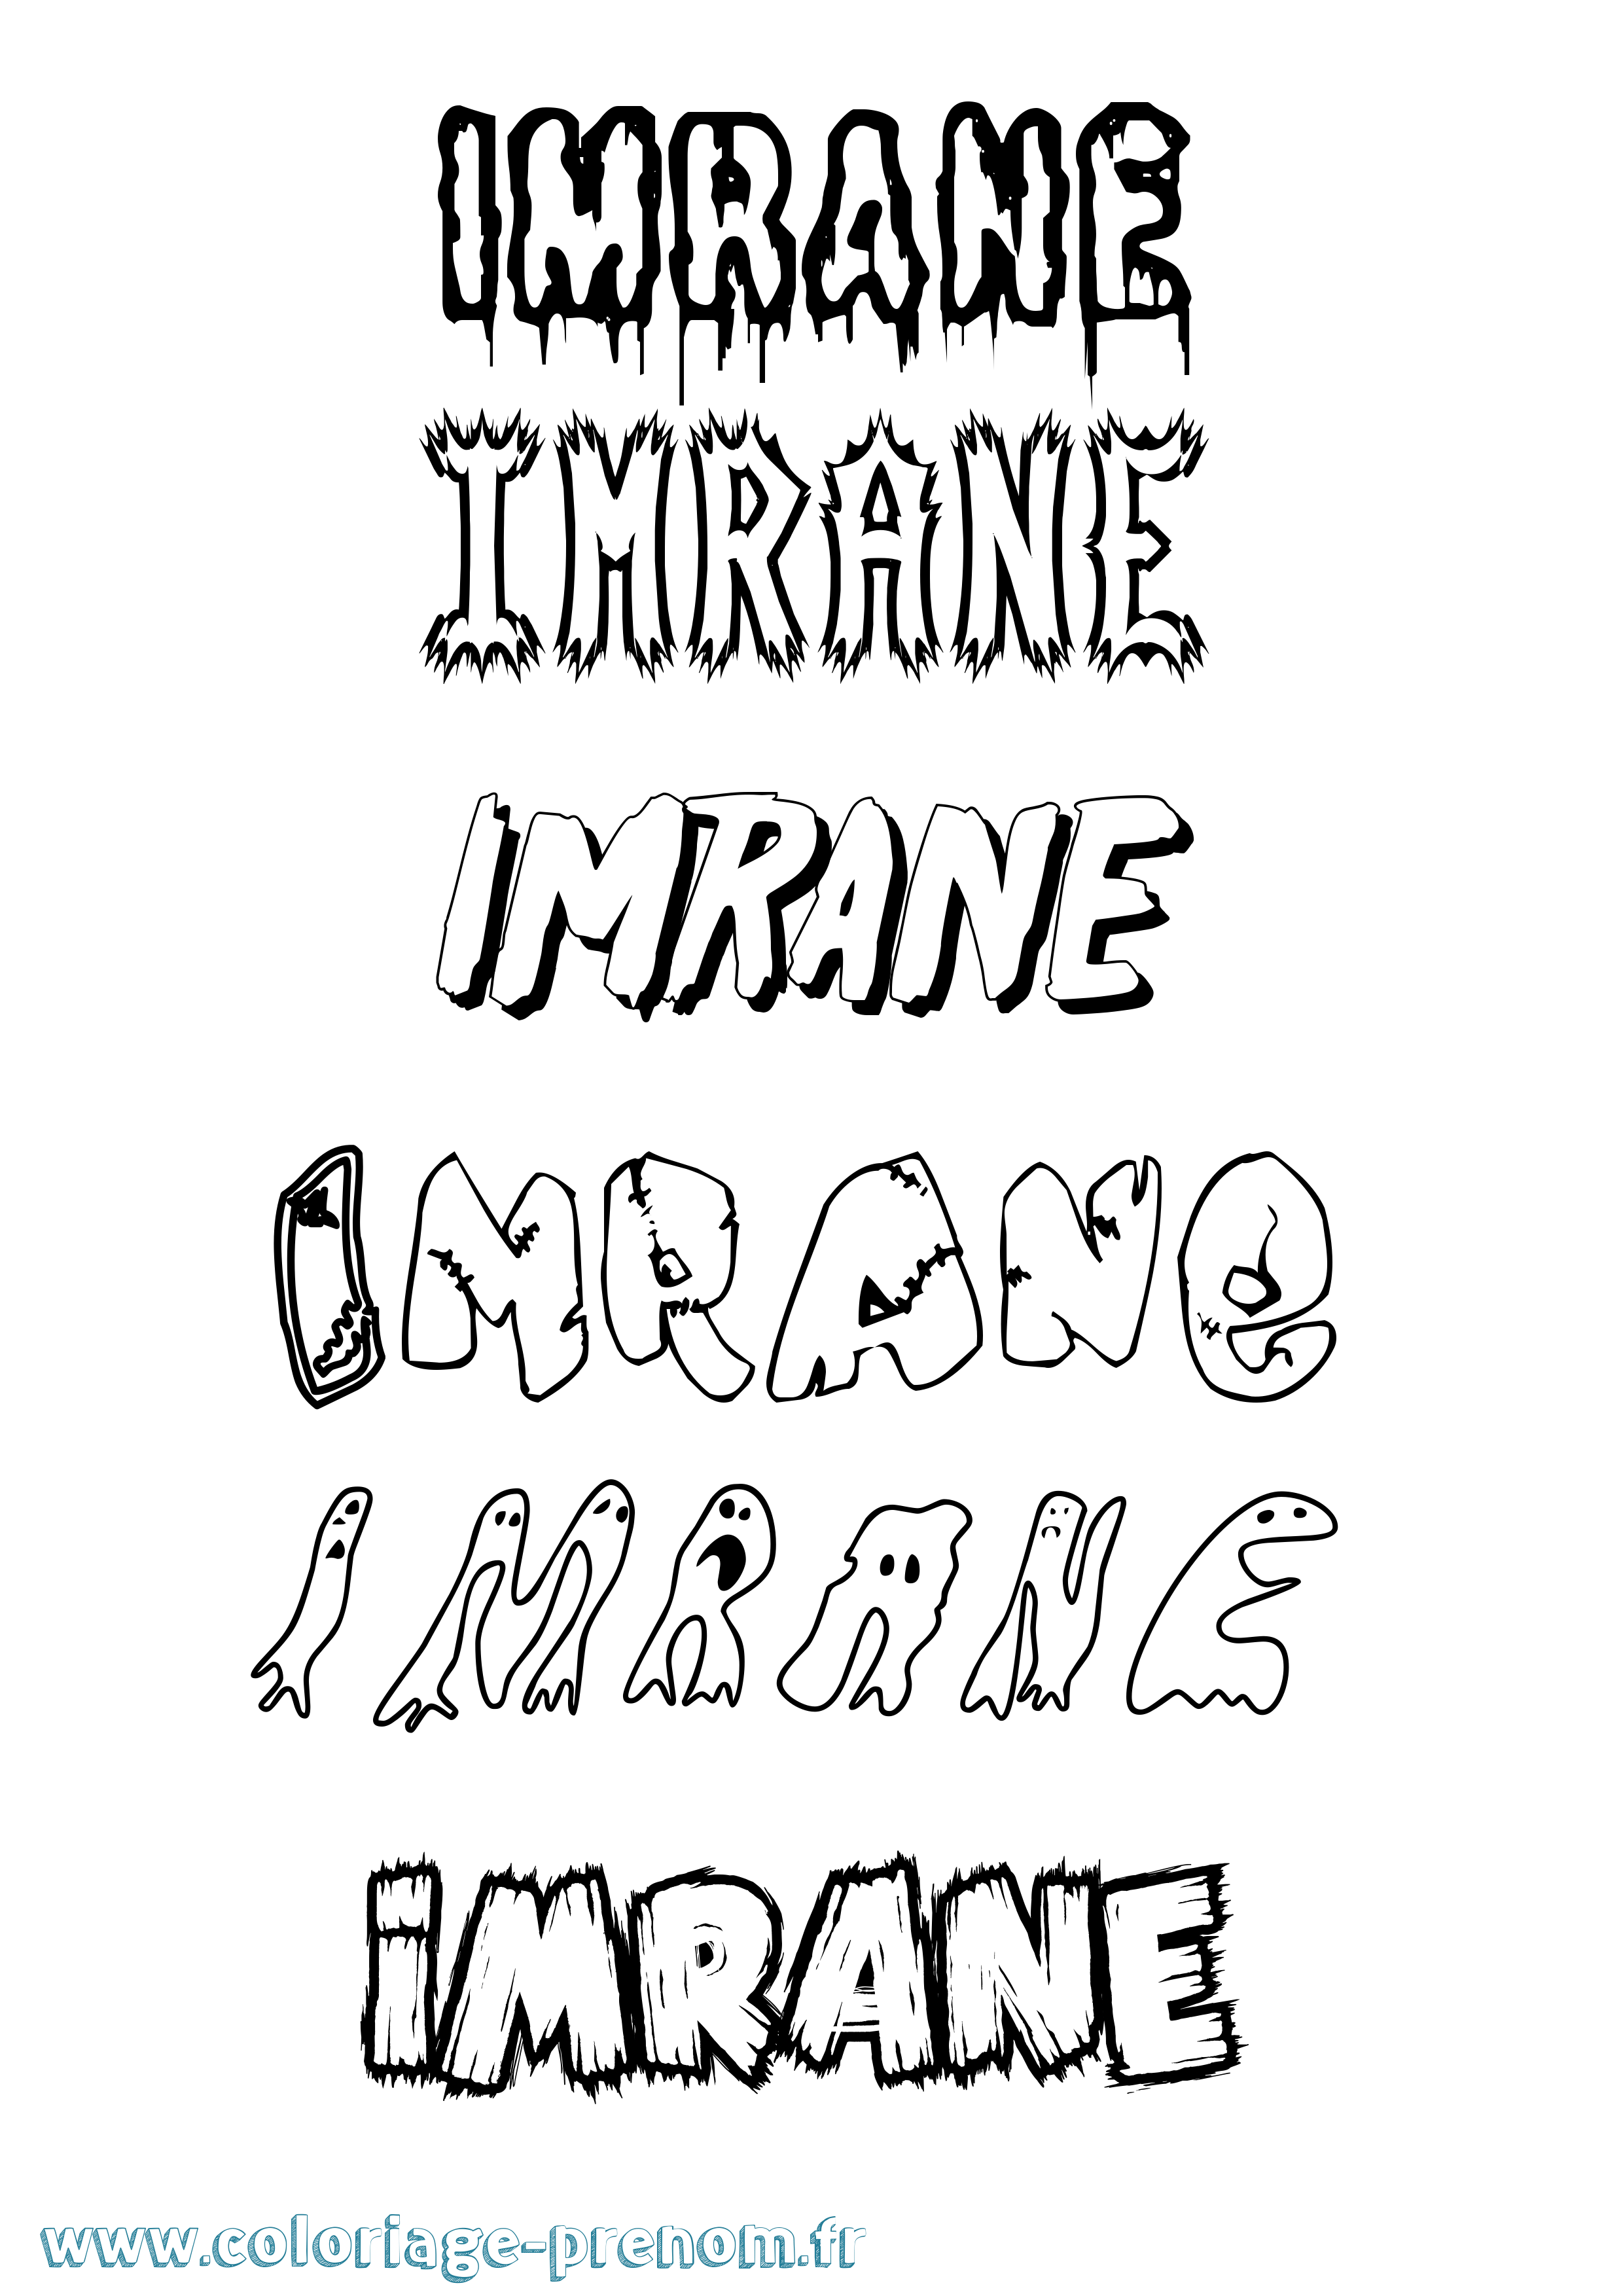 Coloriage prénom Imrane